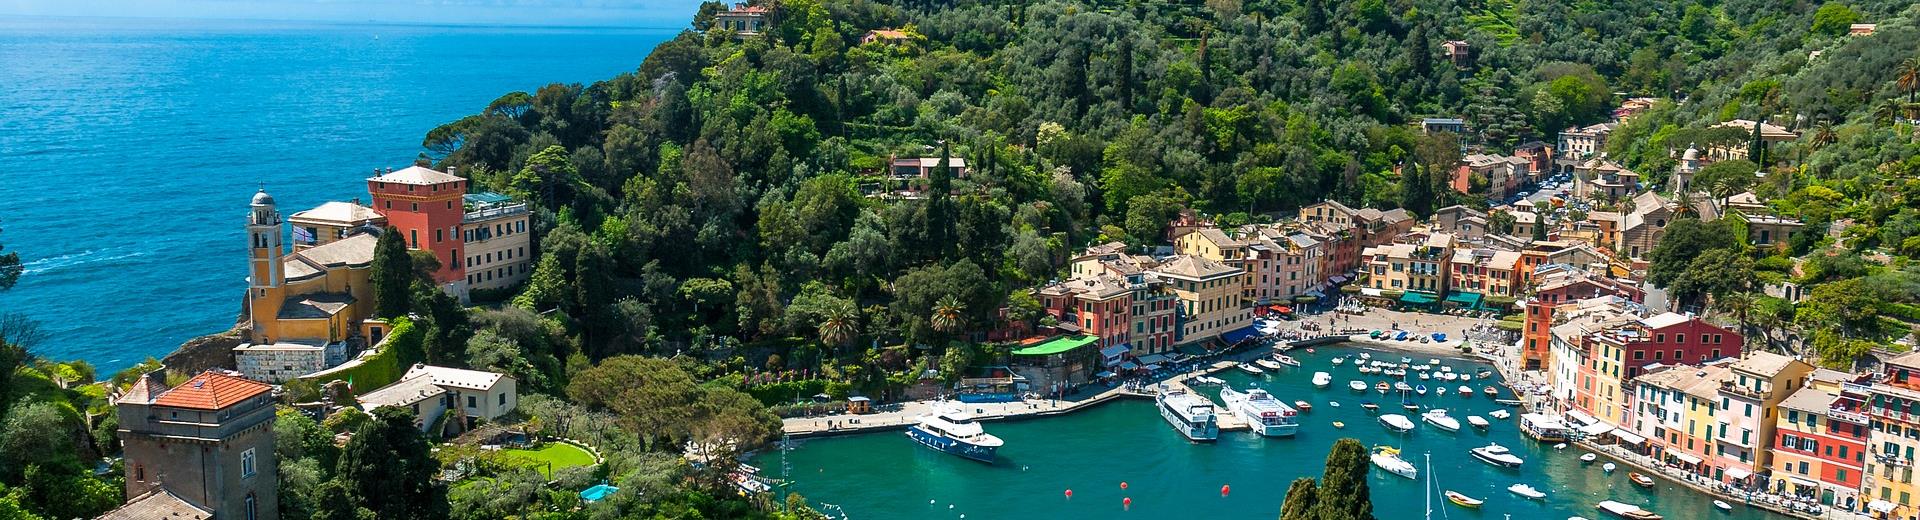 Portofino-Genua und Umgebung Hotel Metropole